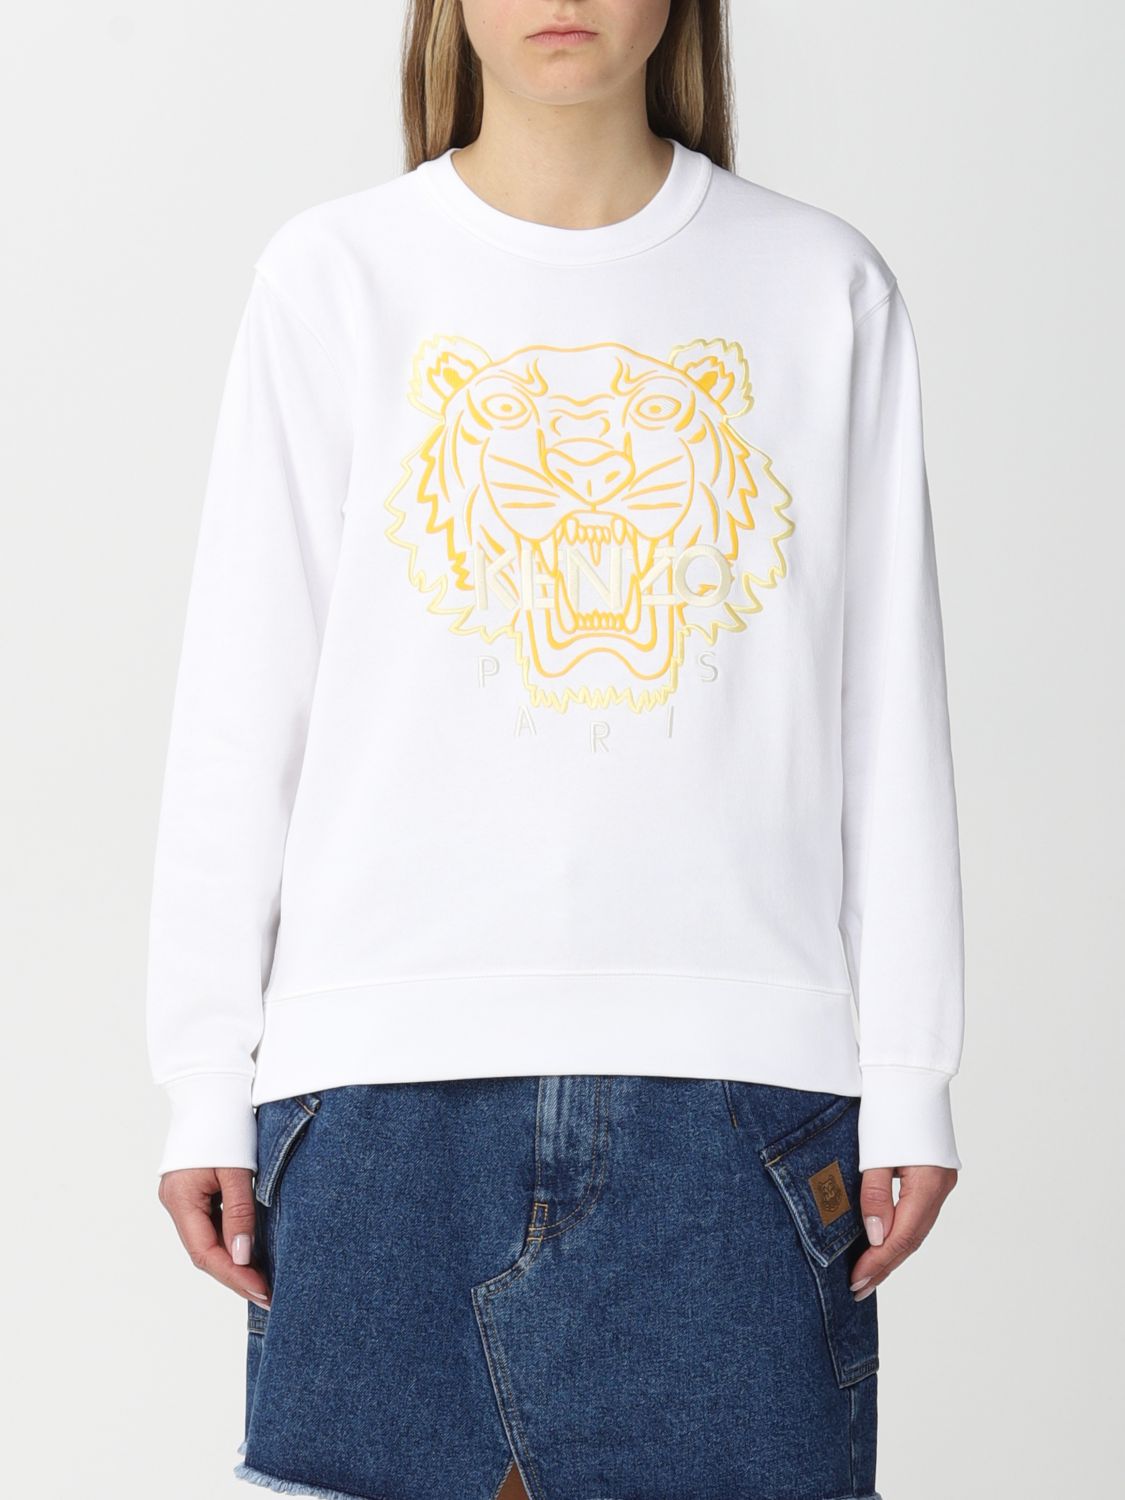 KENZO Classic Tiger Cotton Sweatshirt